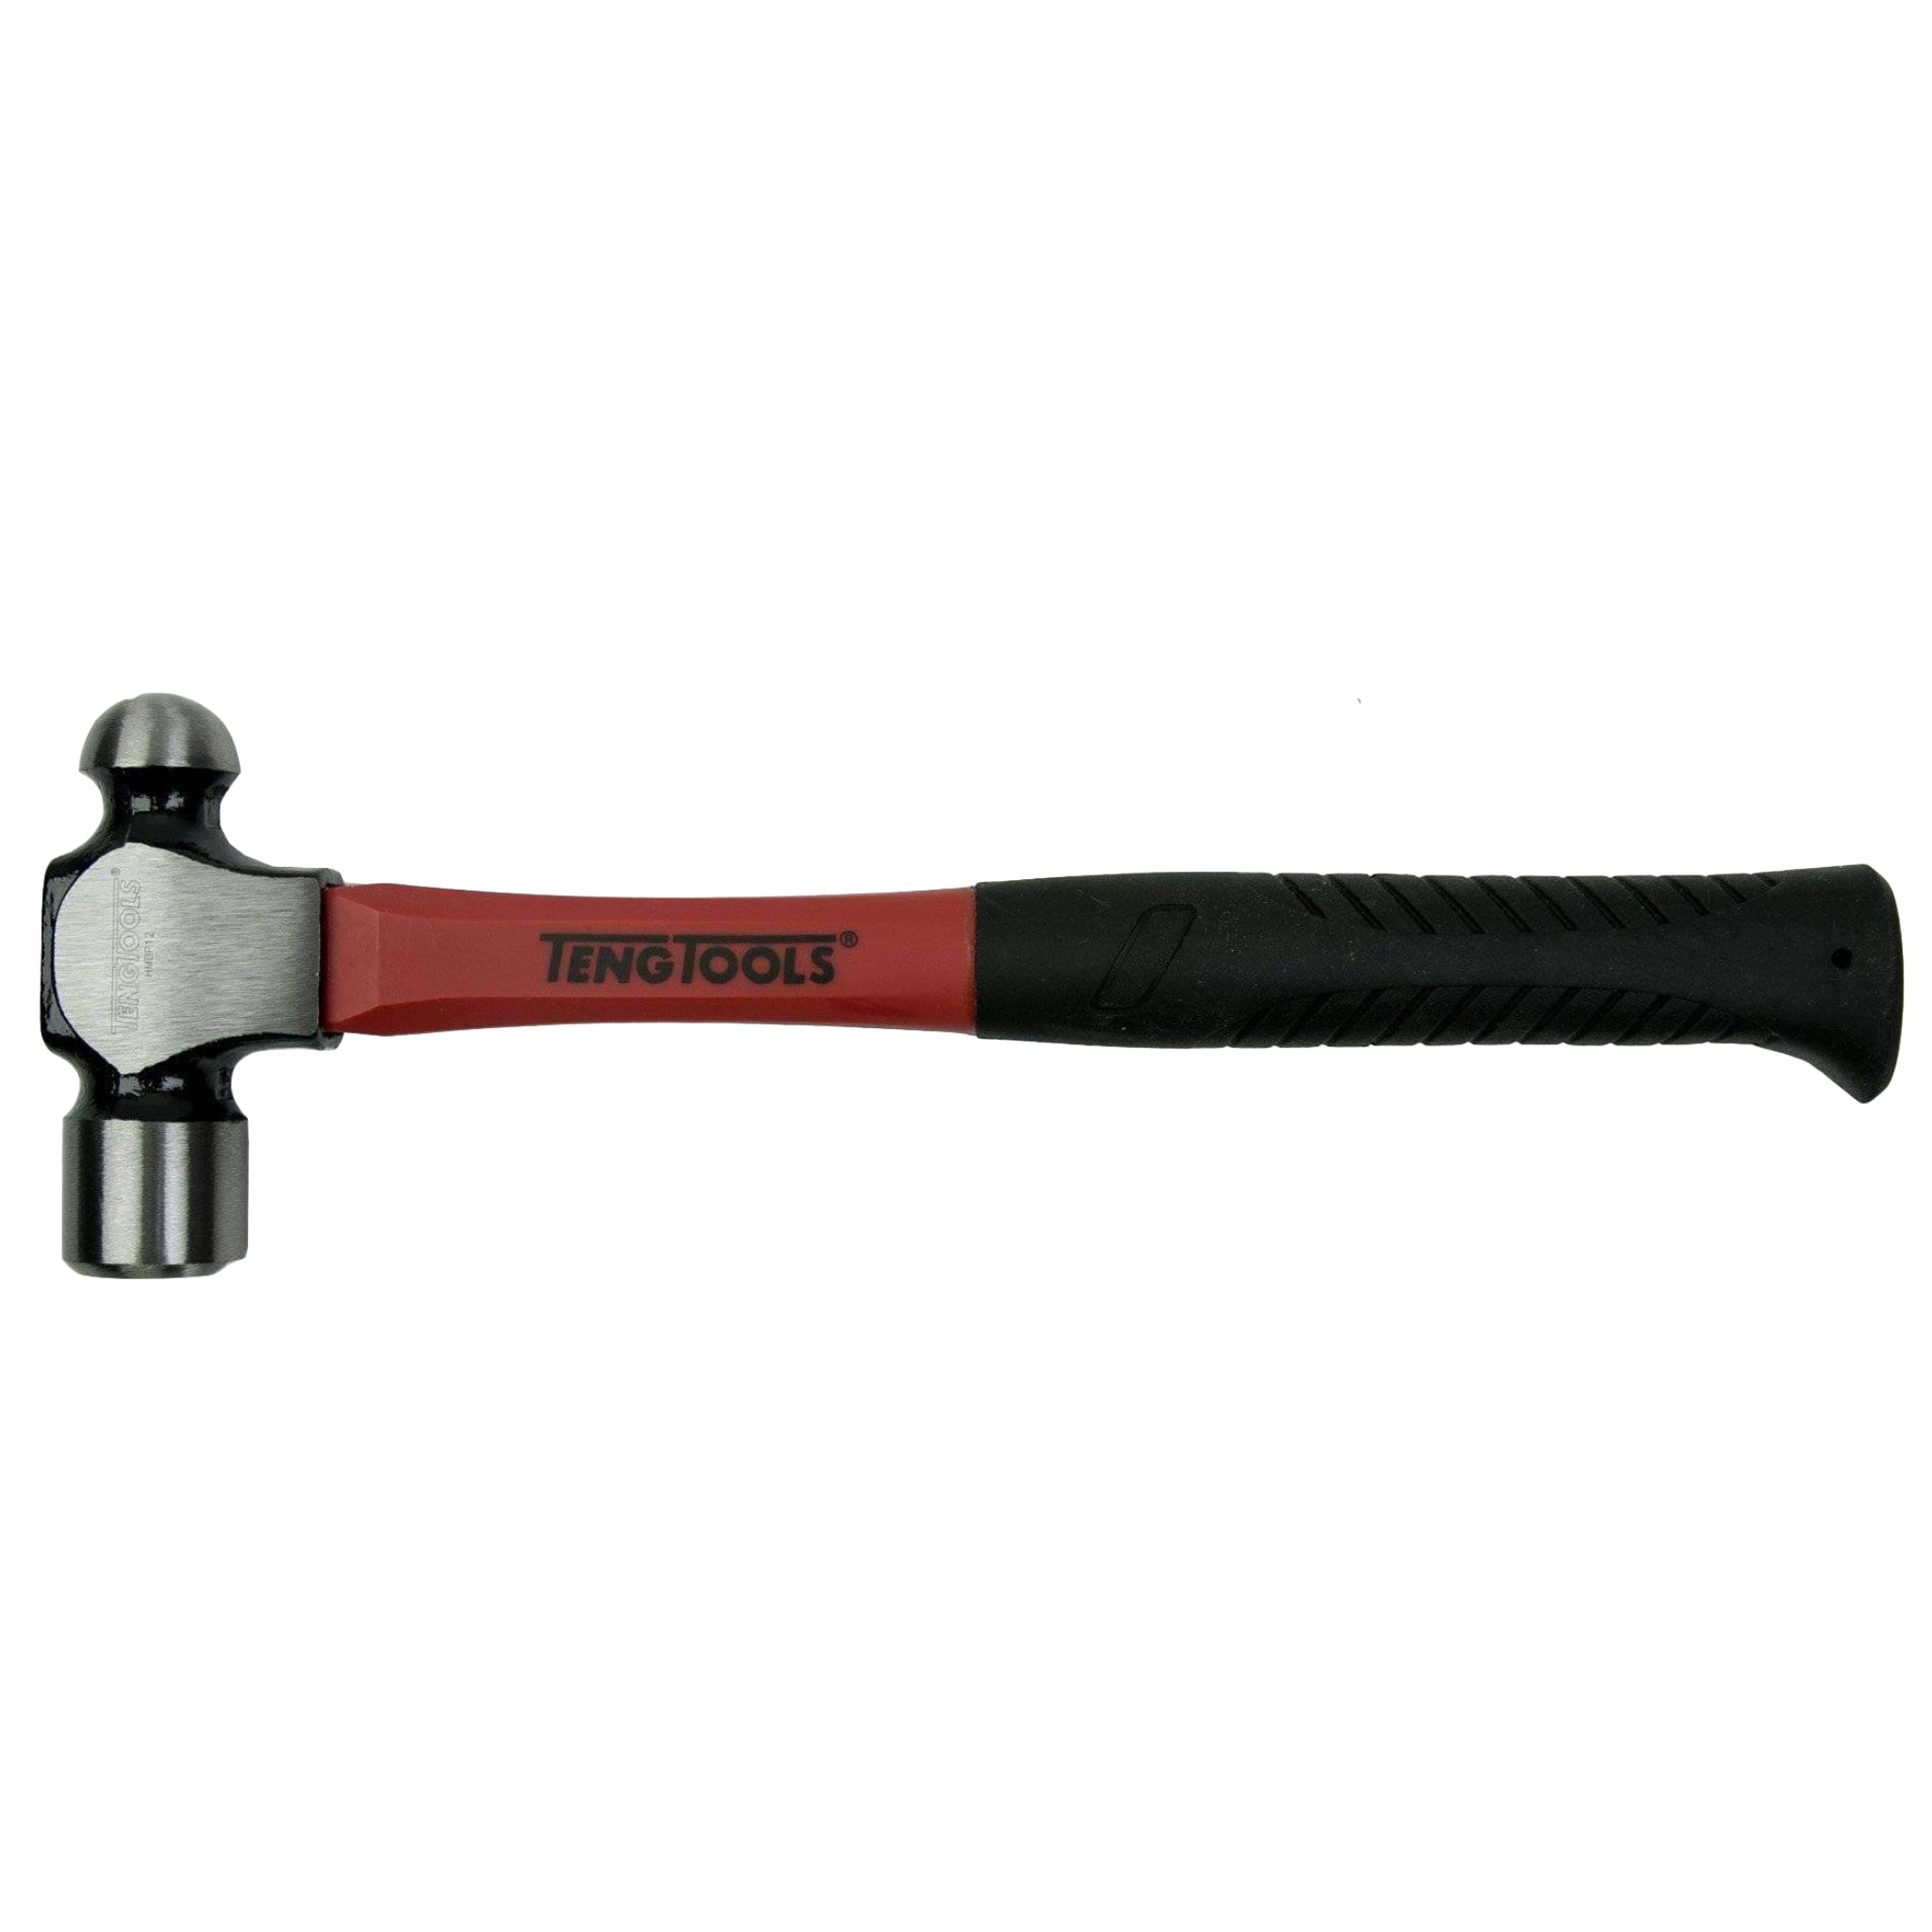 Teng Tools Ball Pein Hammer Range 12, 16, 24 And 32 Ounce (Oz) Hammers - 16 Oz